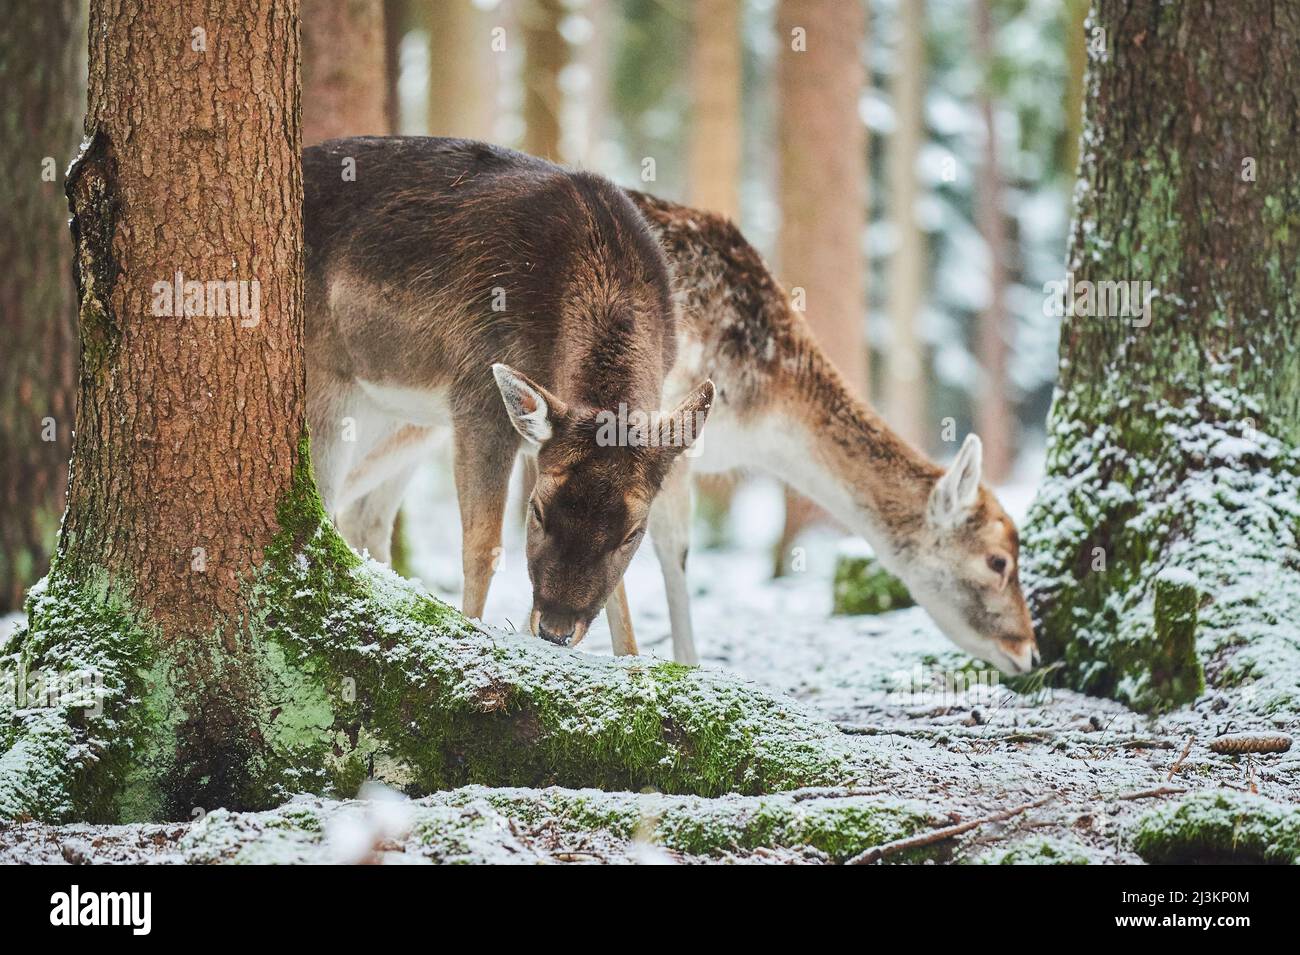 Fallow deer (Dama dama) in a snowy forest, captive; Bavaria, Germany Stock Photo